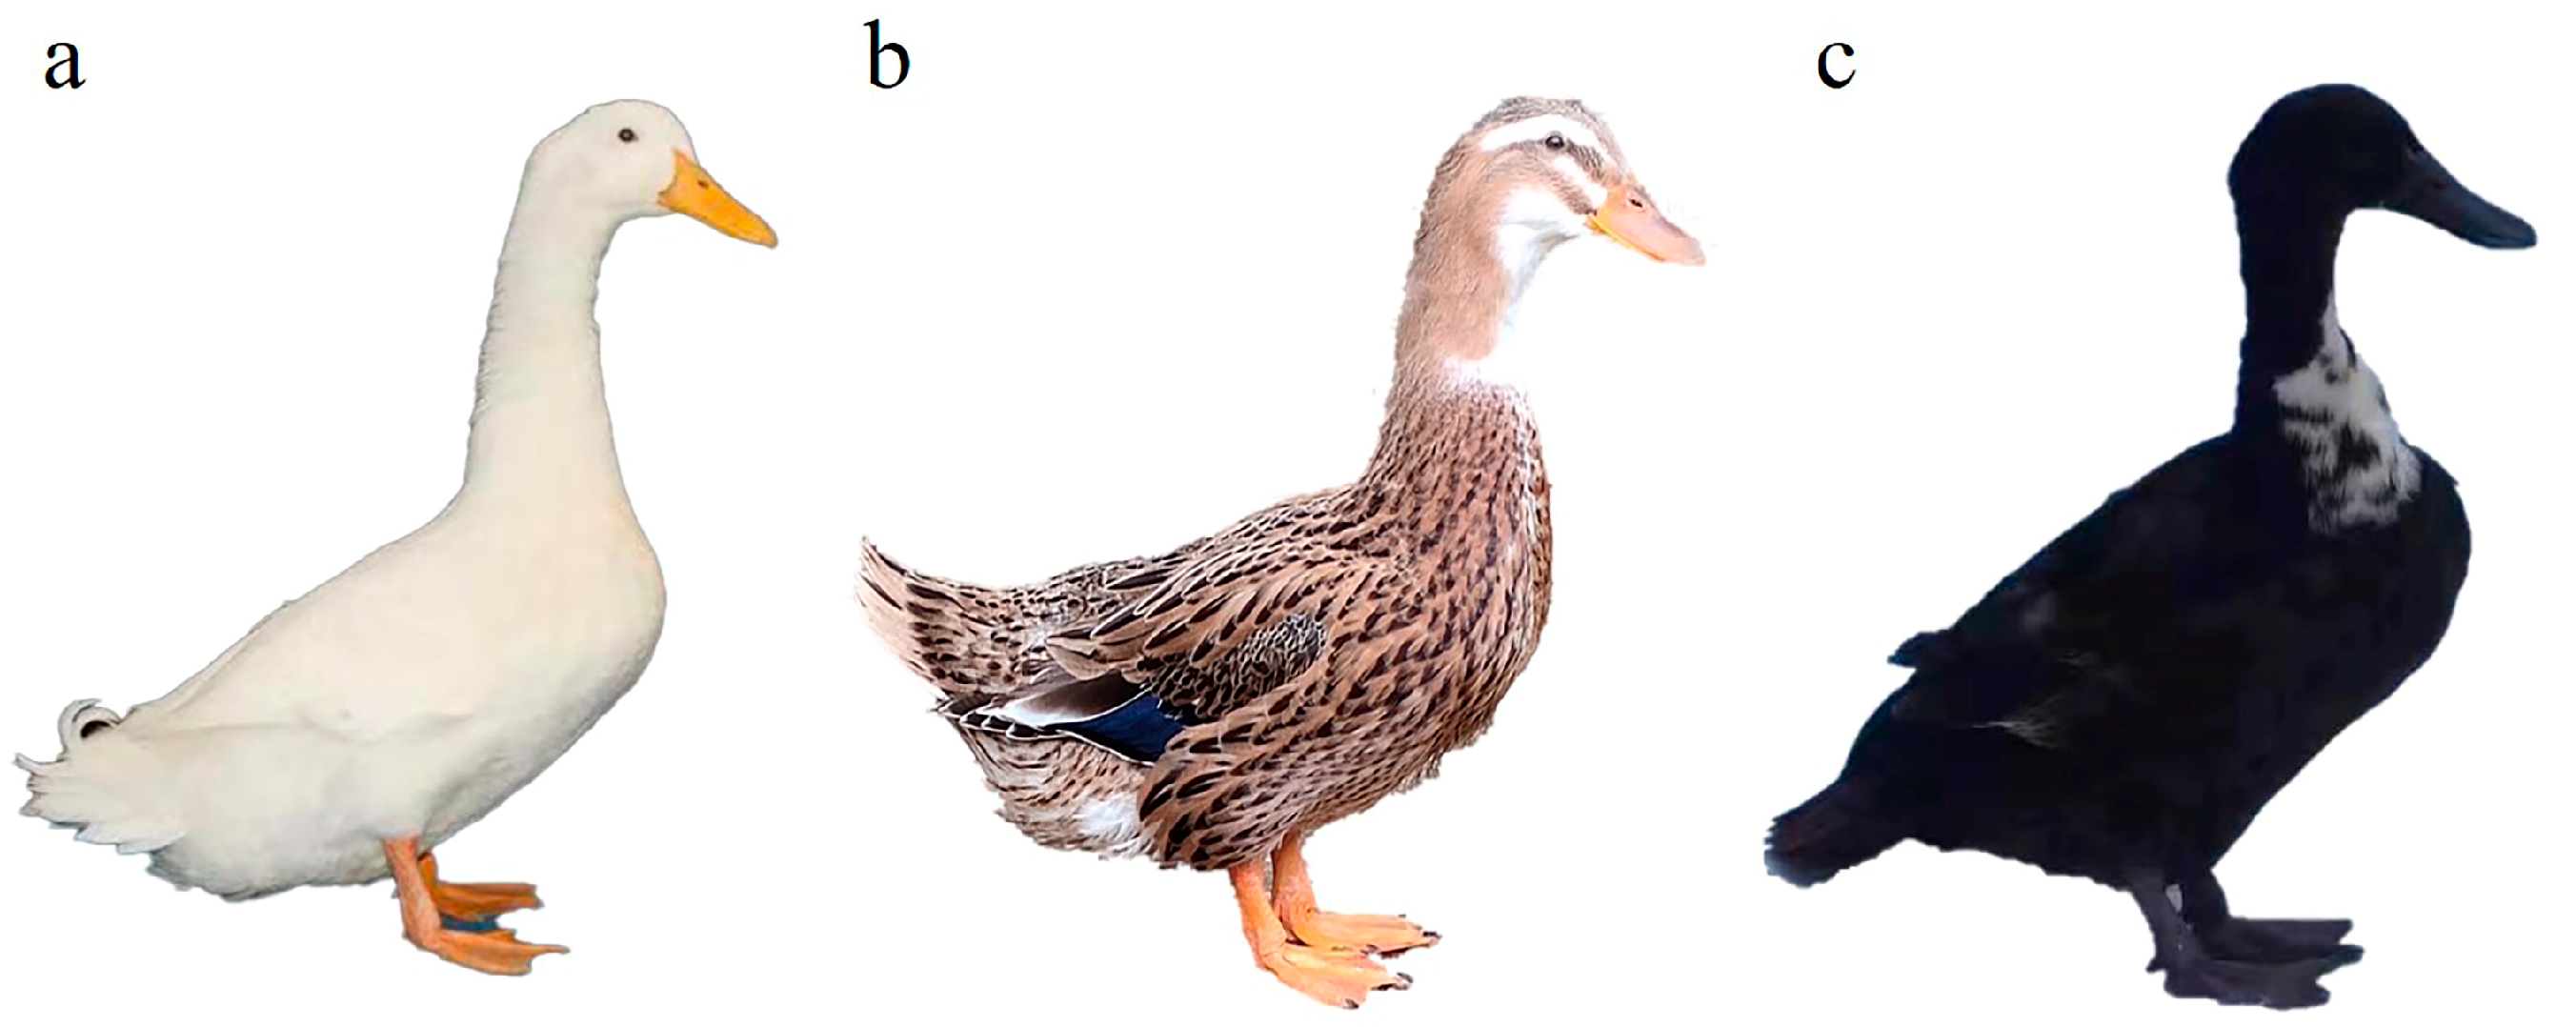 MY DUCK IS EVOLVING!? - Duck Life 3: Evolution 